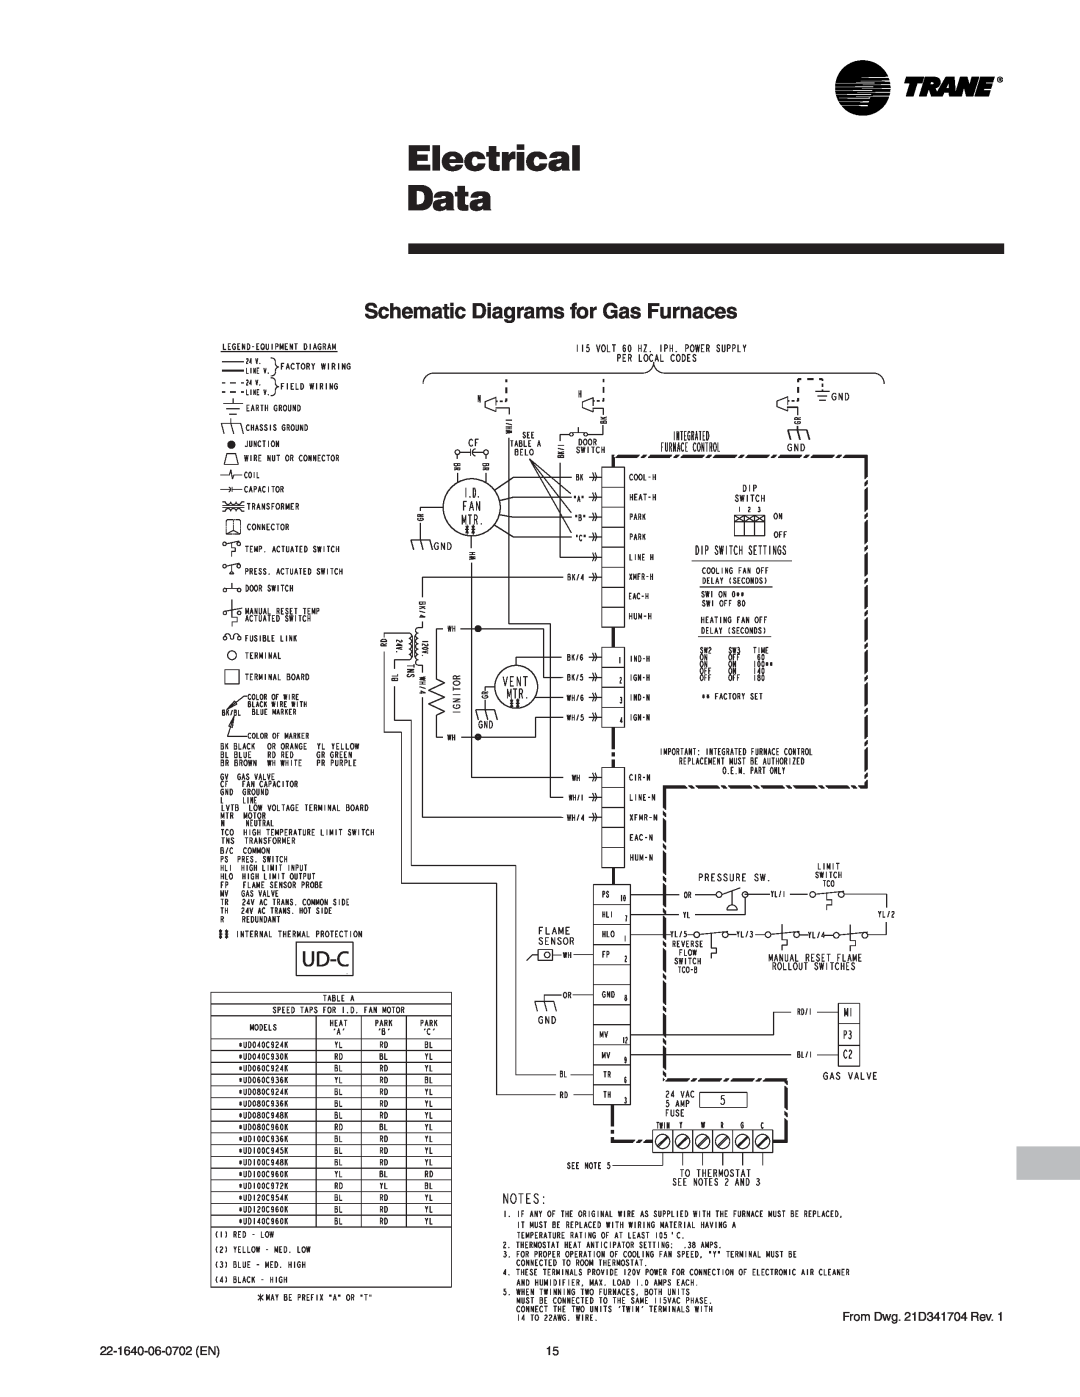 Trane Upflow/Horizontal Right or Upflow/Horizontal Left Induced Draft Gas Furnace, FURN-PRC001-EN manual Electrical Data 